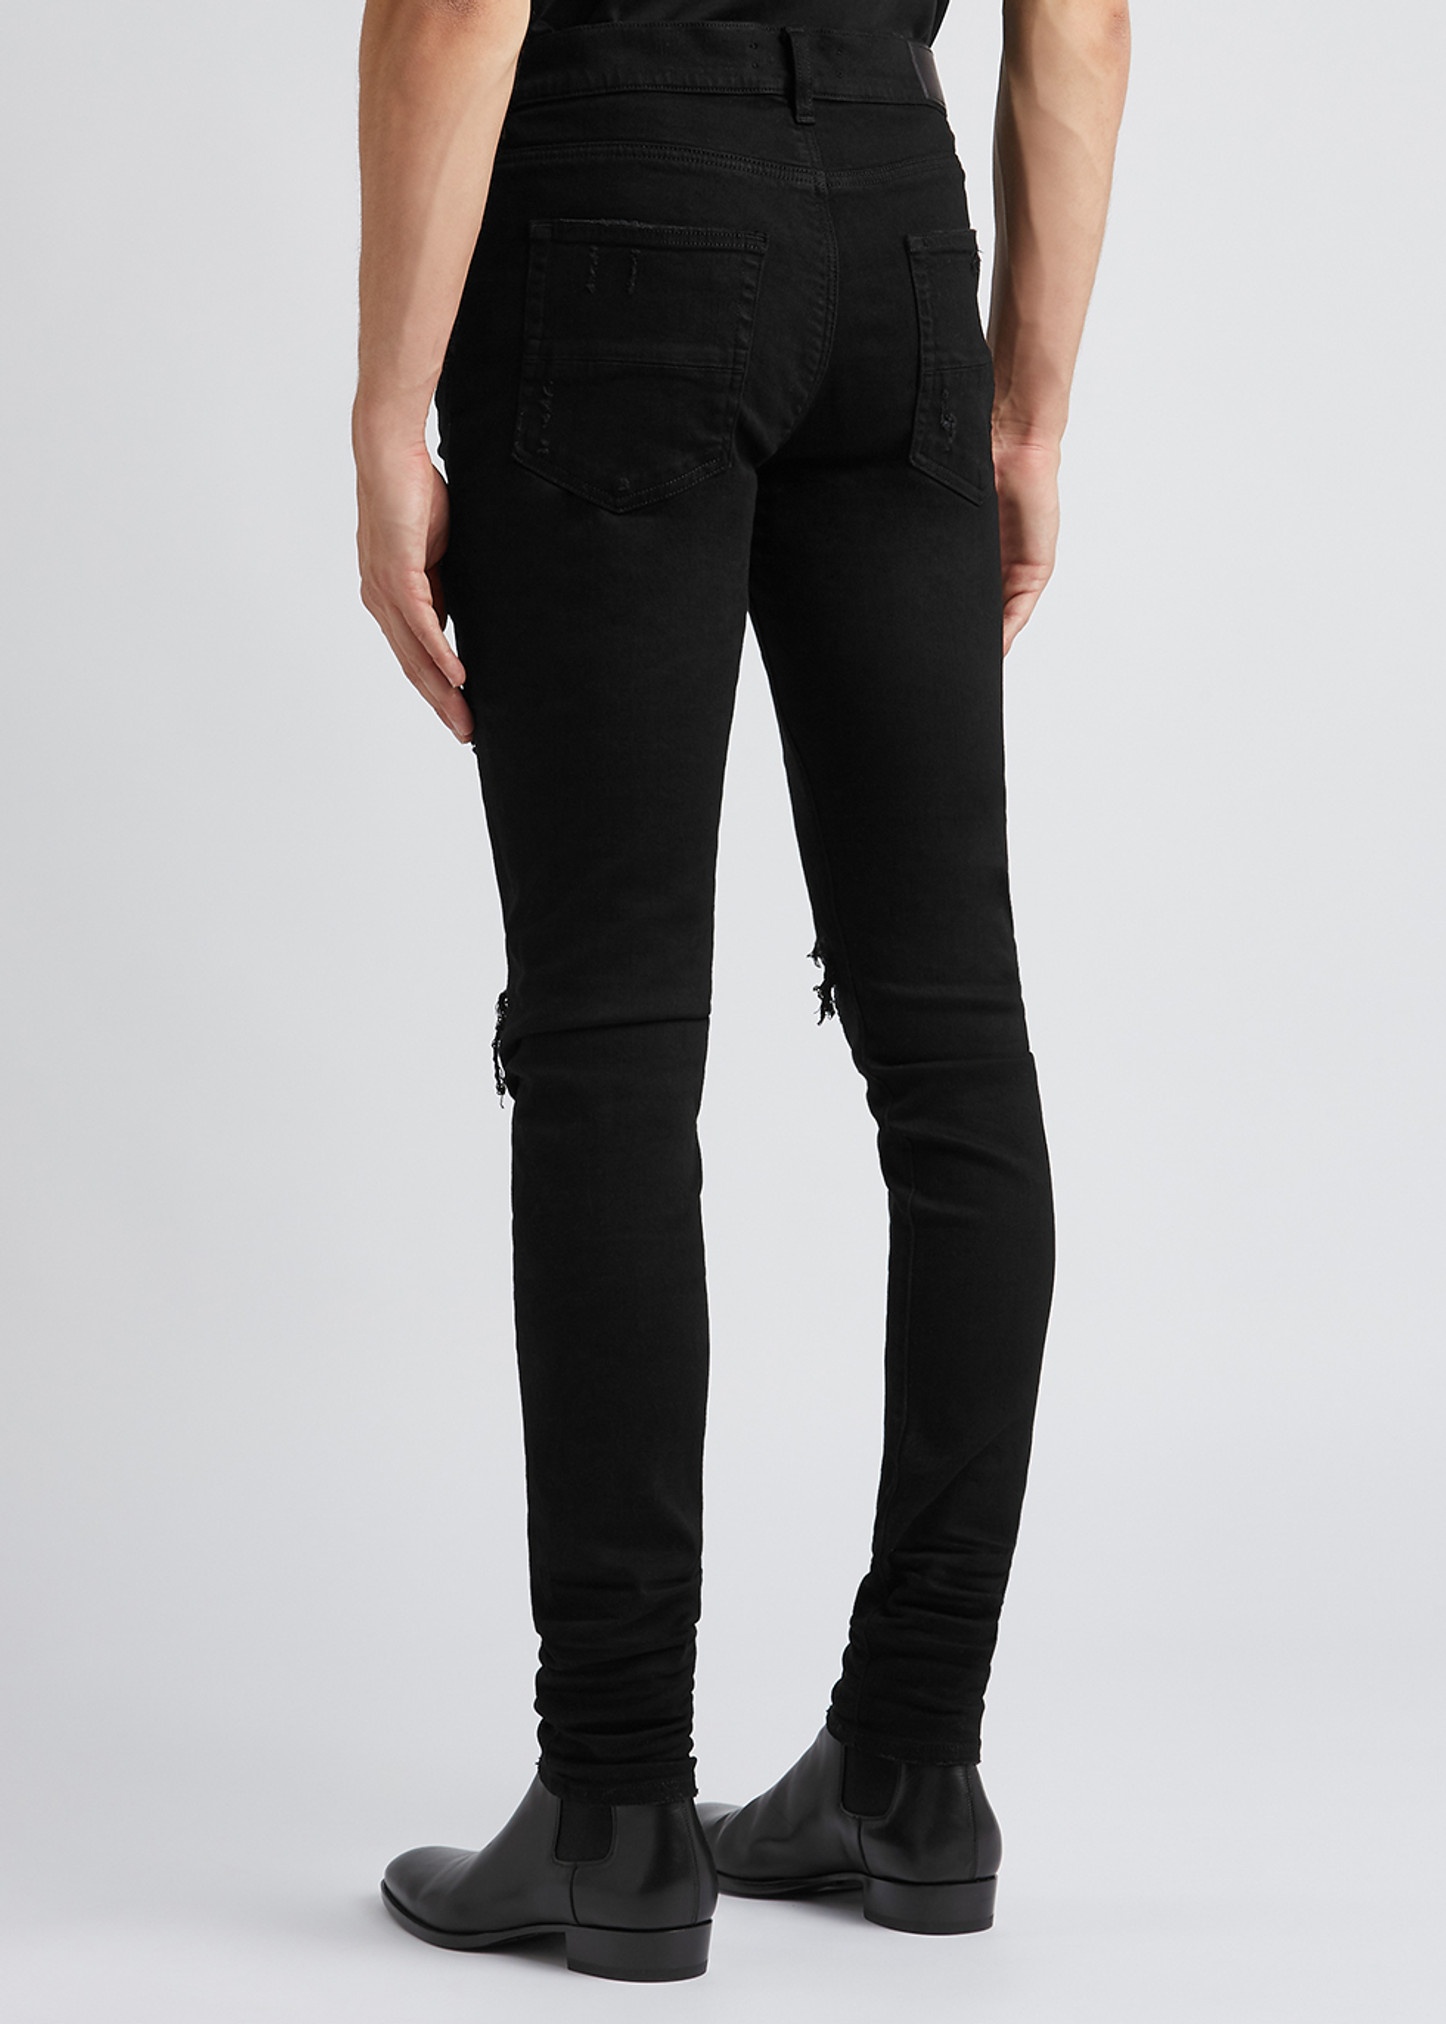 MX1 black distressed skinny jeans - 3